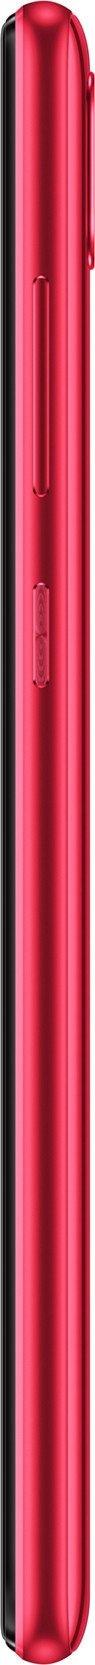 Смартфон Huawei Y7 (2019) 32GB Coral Red (Красный)